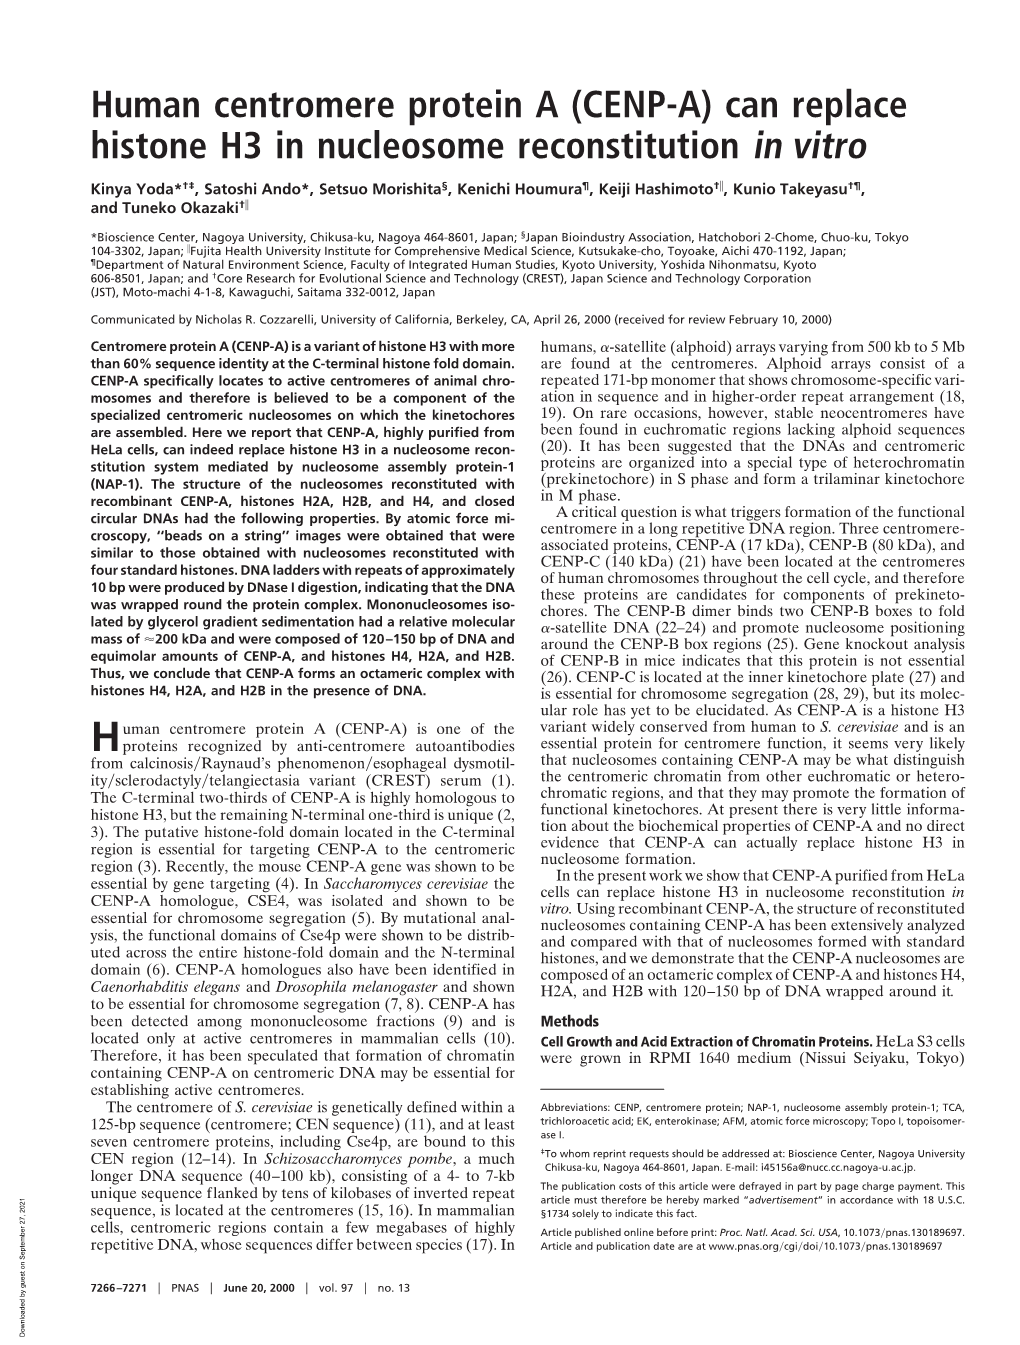 (CENP-A) Can Replace Histone H3 in Nucleosome Reconstitution in Vitro